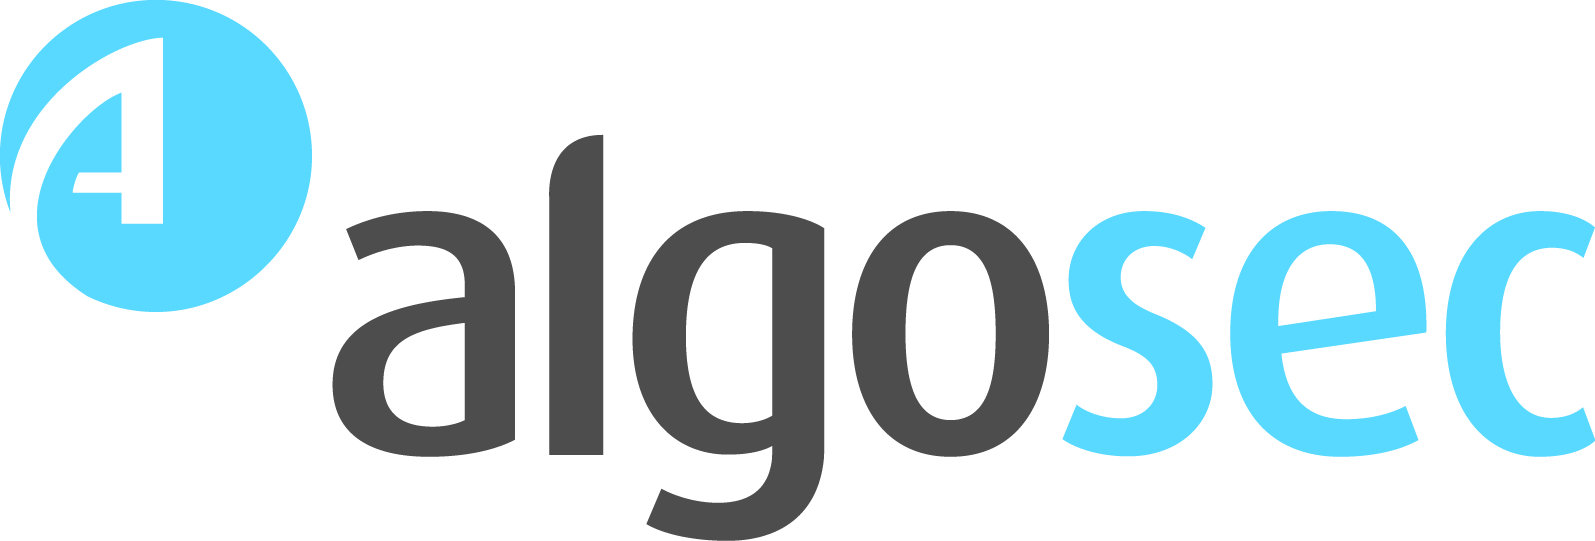 AlgoSec_logo_cmyk